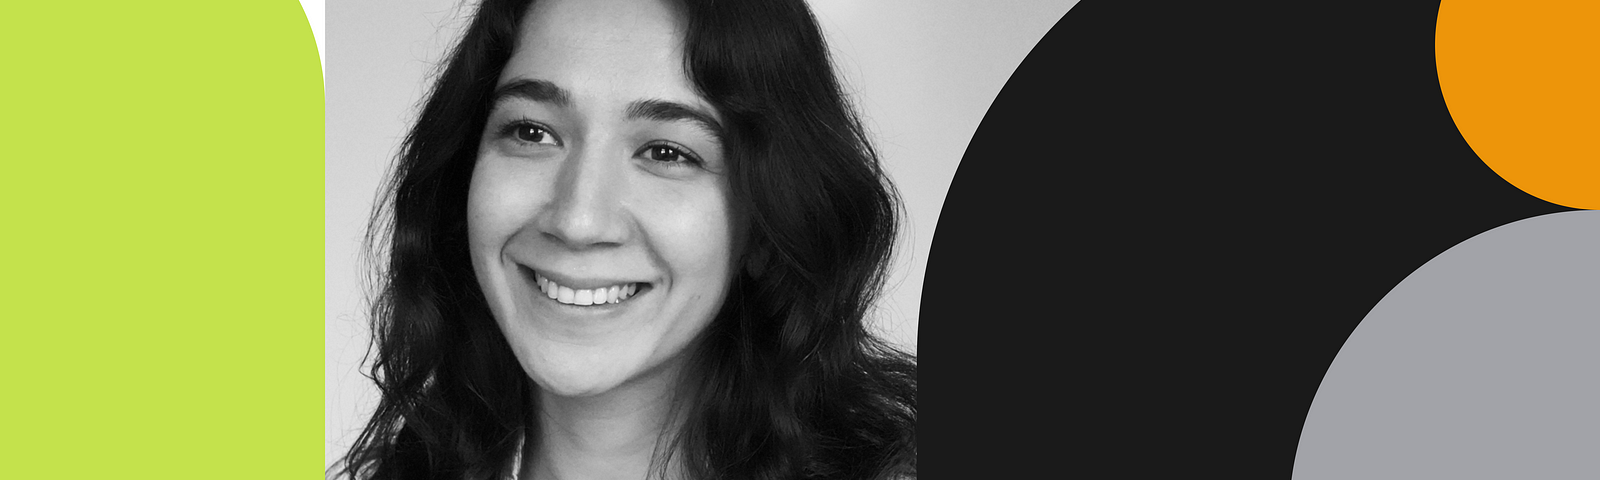 Şeyda Ülgen, Senior Product Designer in Zalando’s Profiles and Personalization team